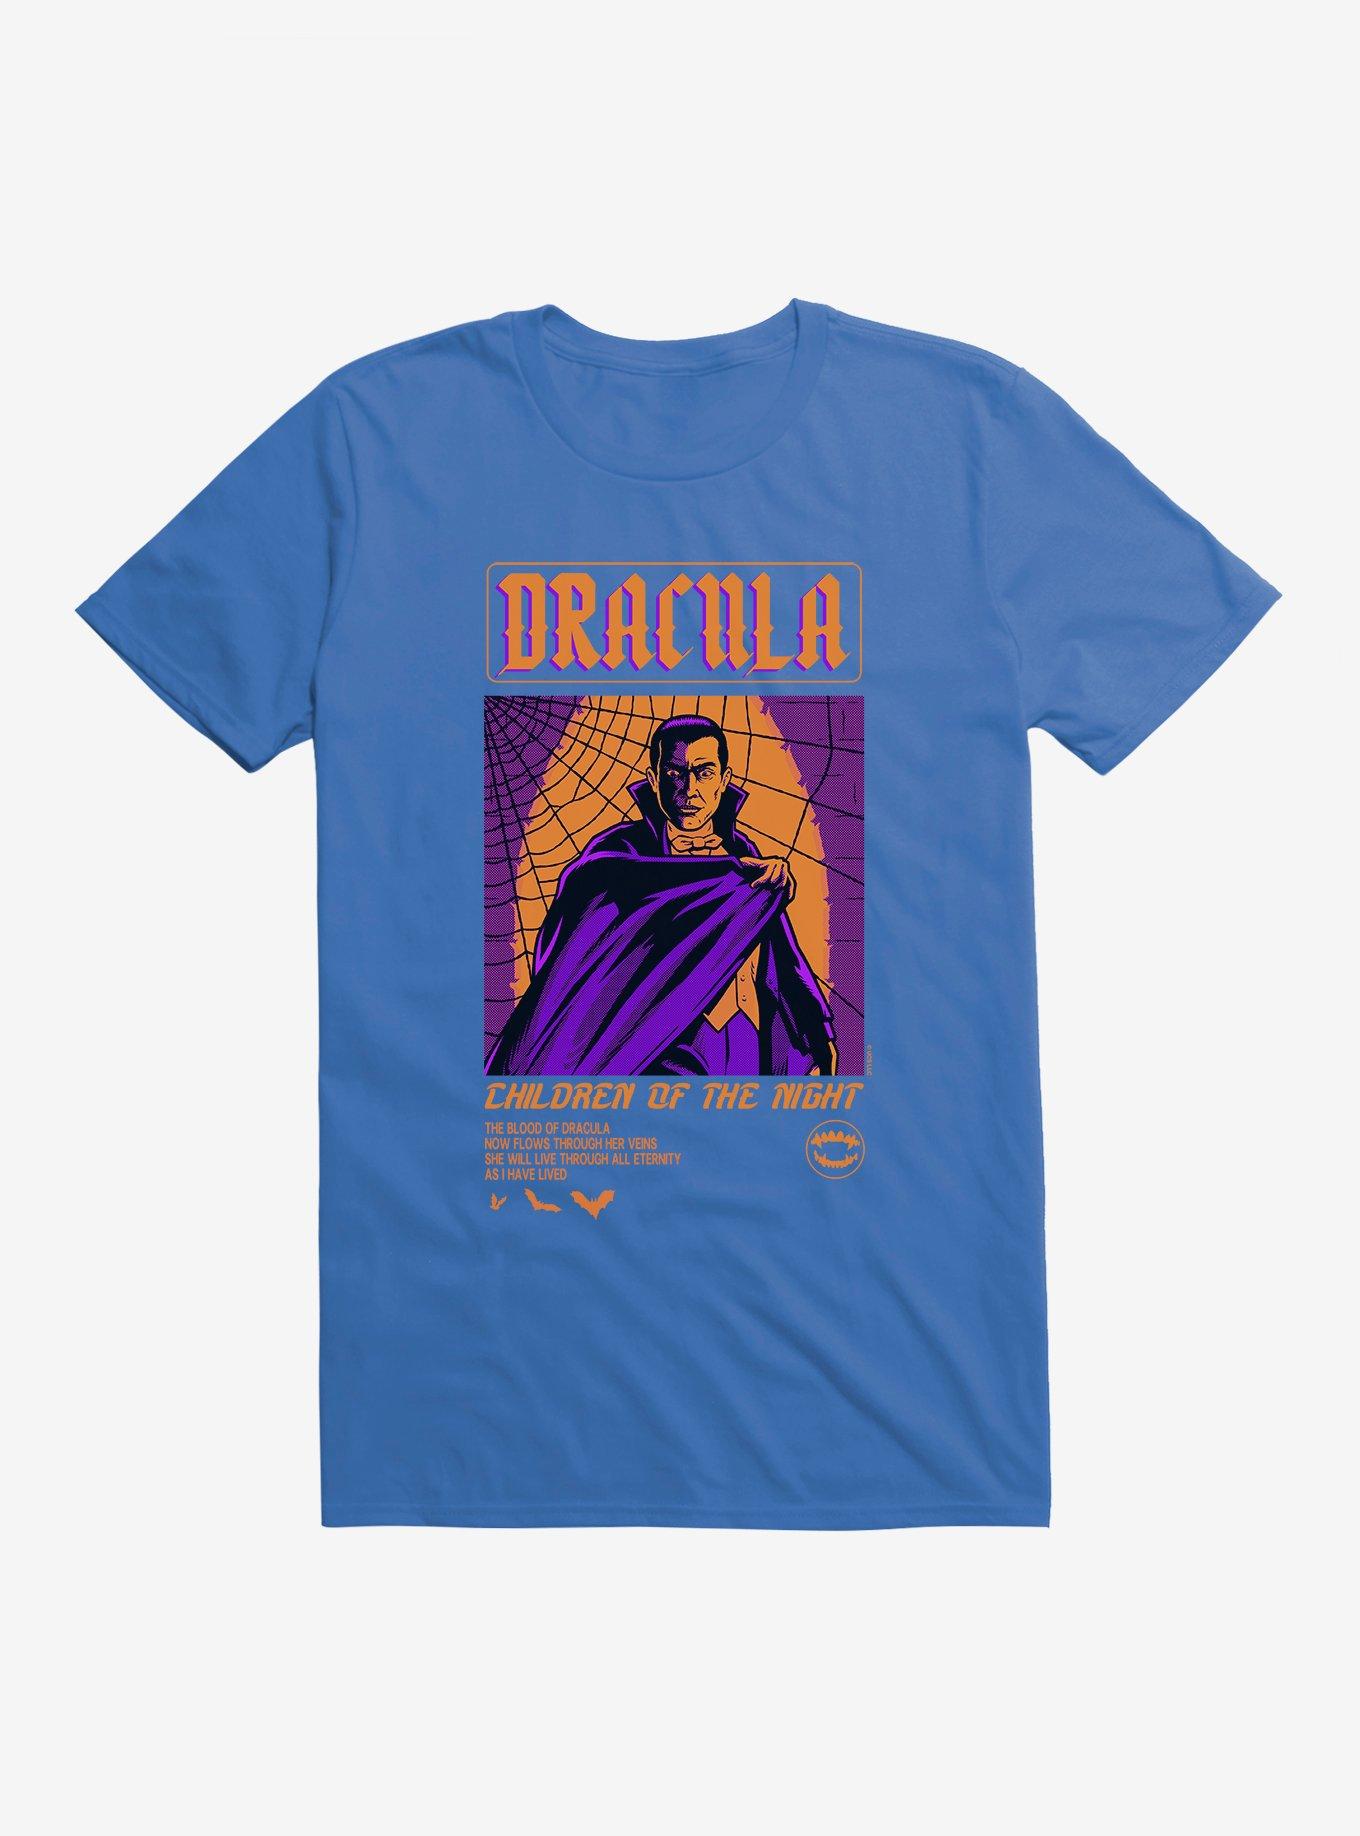 Universal Monsters Dracula Through The Veins T-Shirt